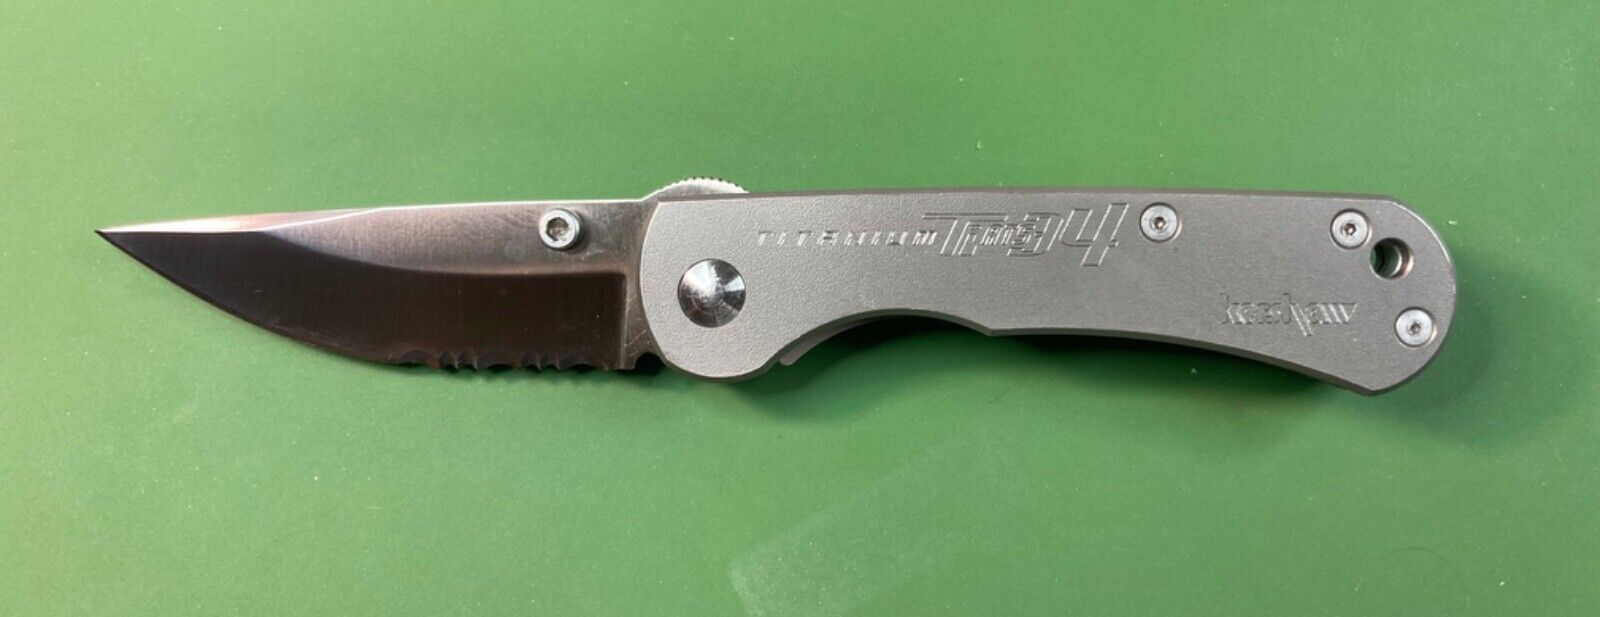 Kershaw Titanium knife 1410ST Oregon USA ATS34 steel 